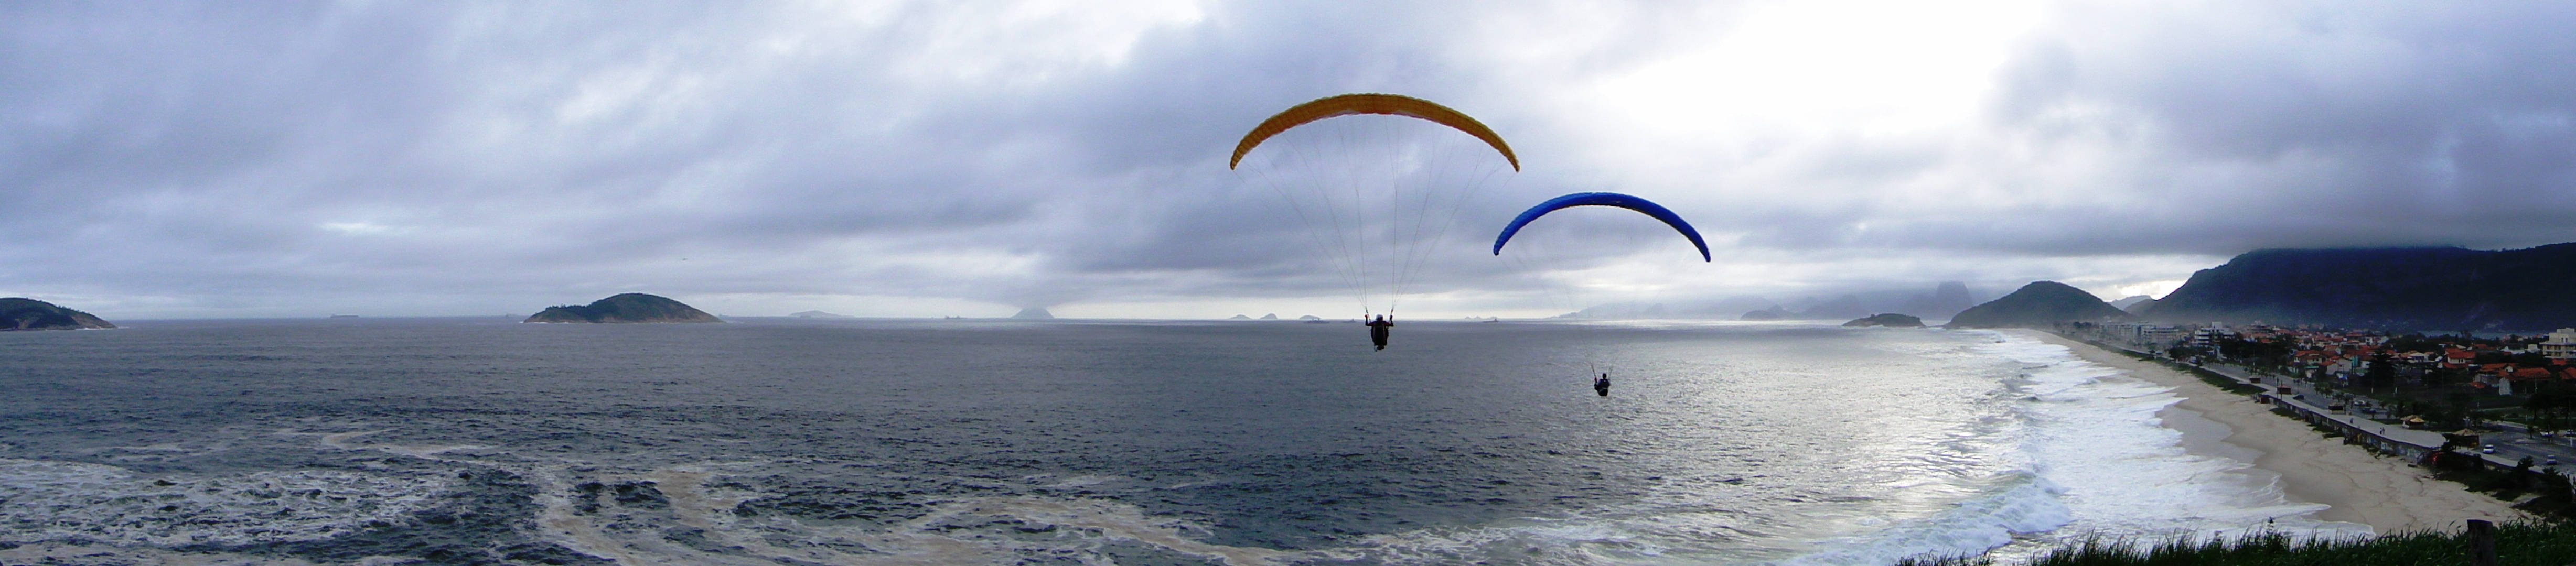 Paragliding Pilots Panoramic Shot Background